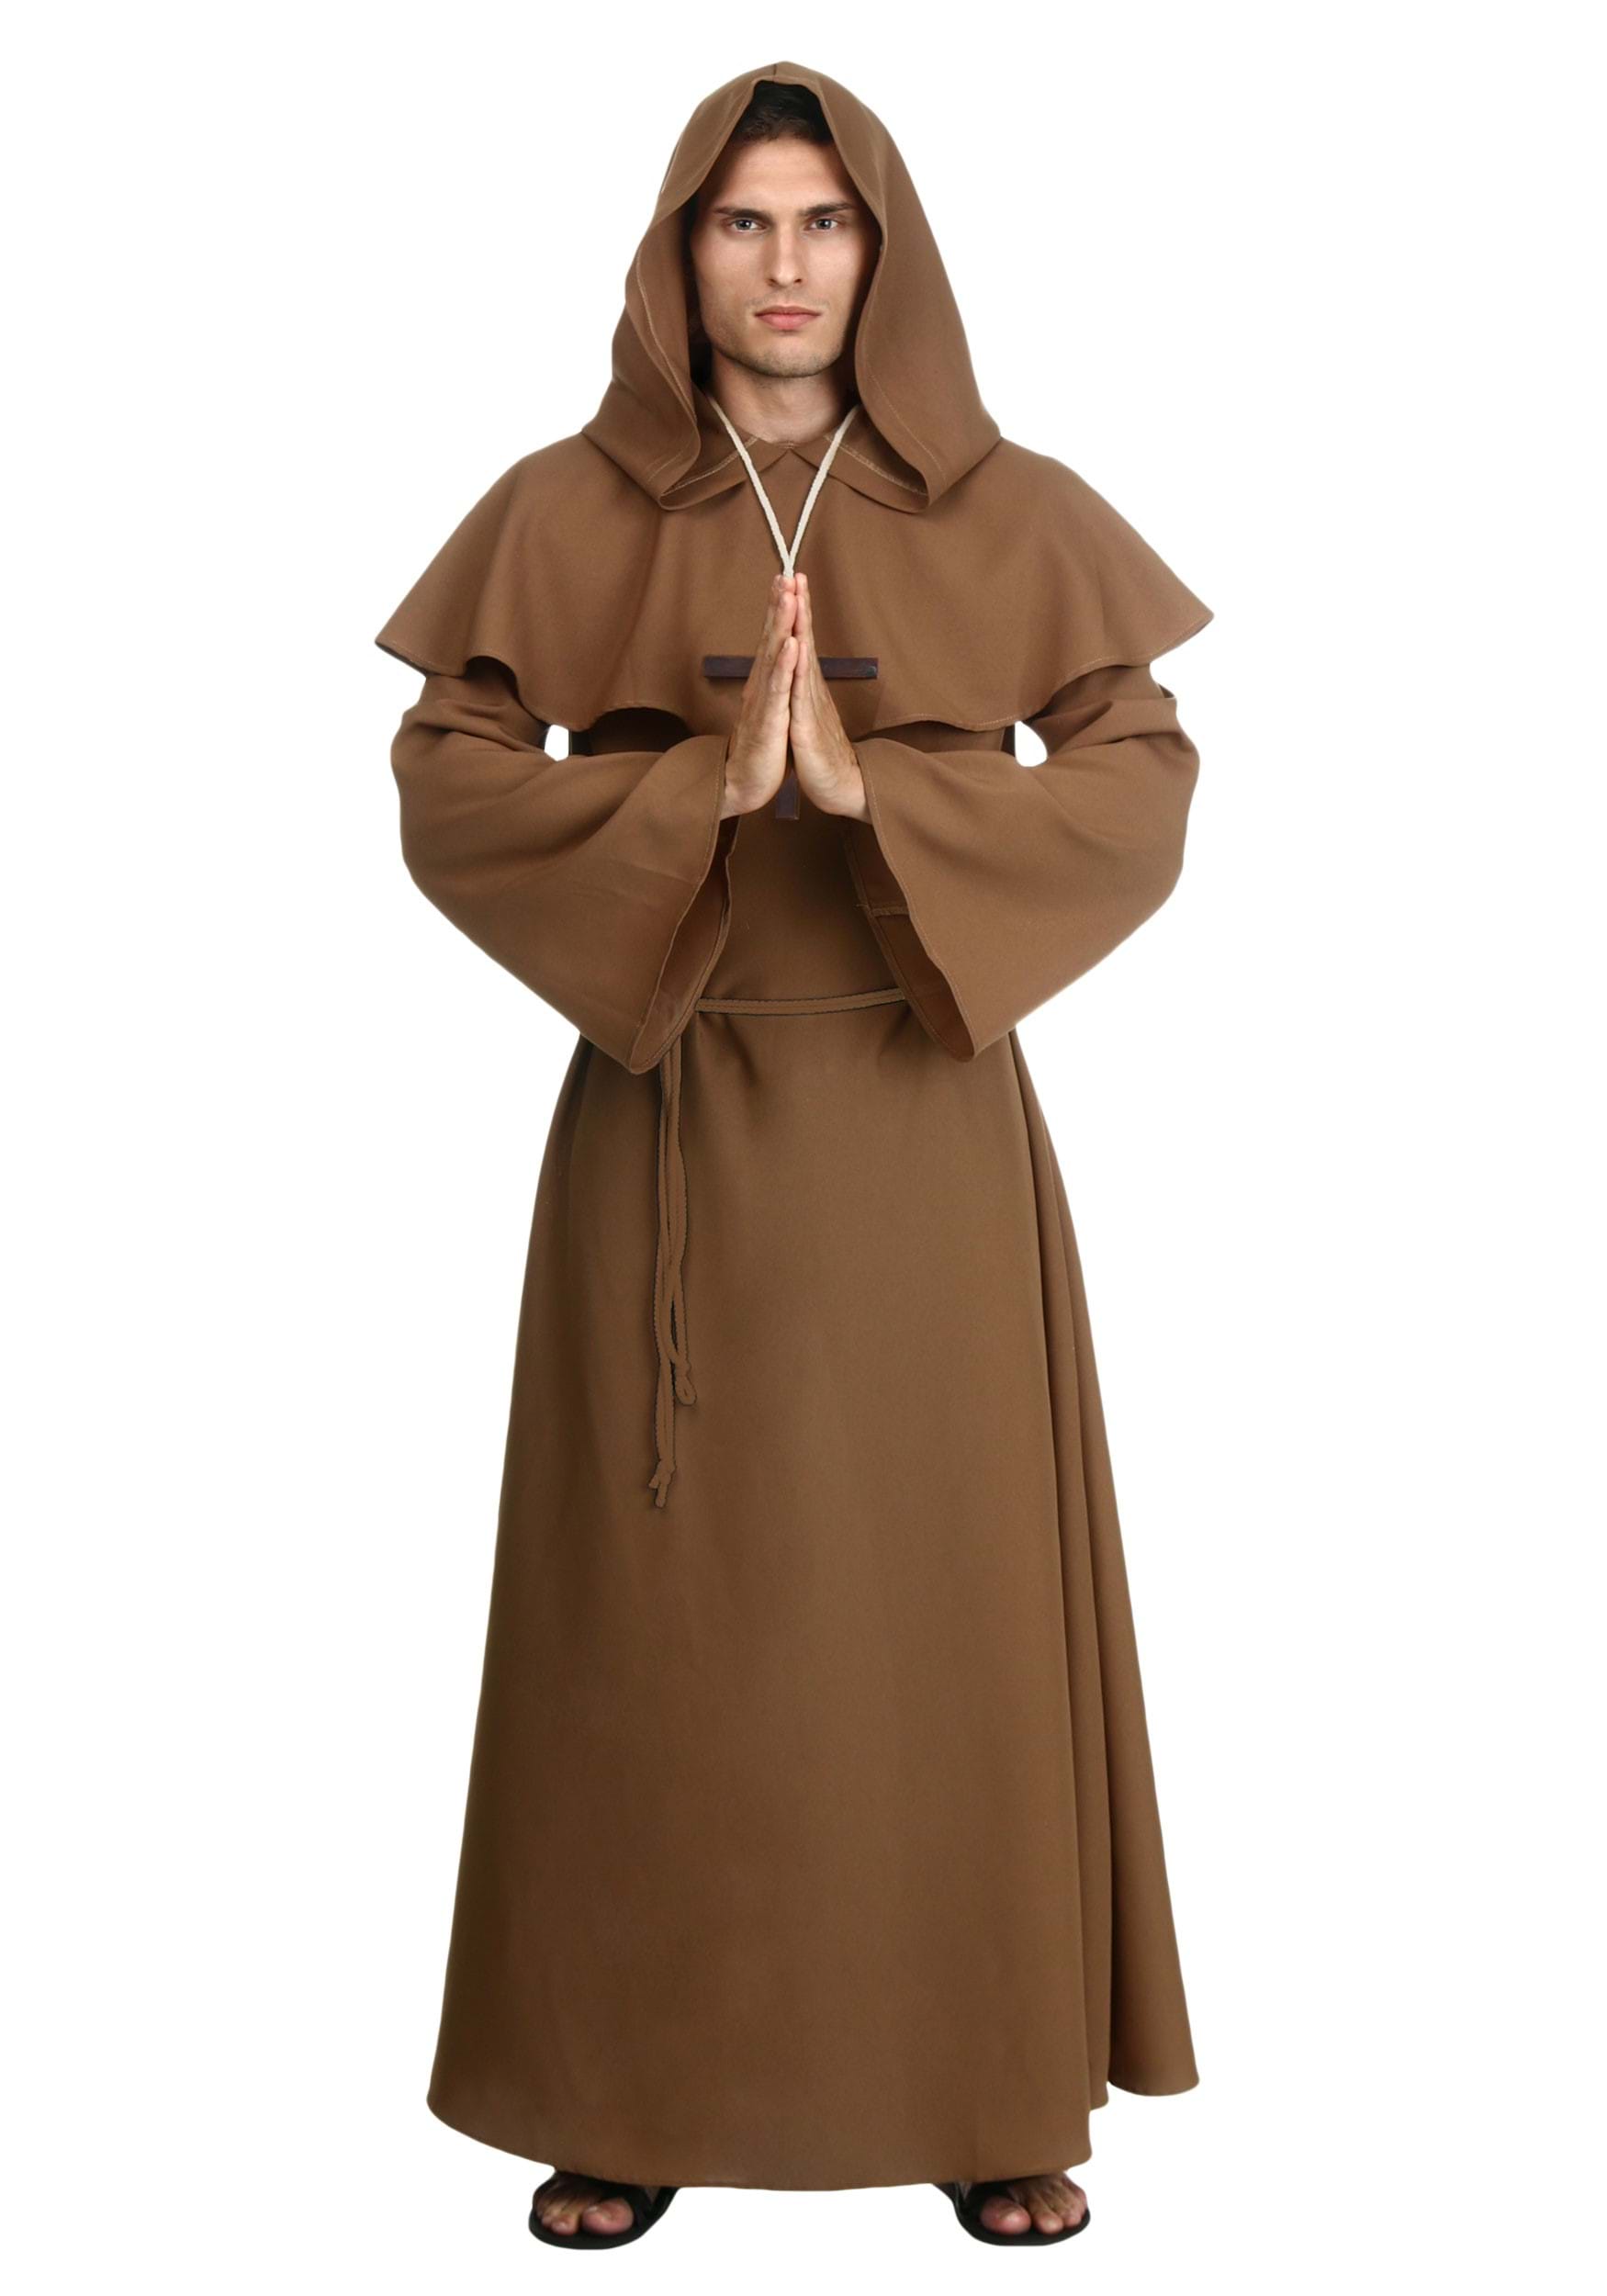 Photos - Fancy Dress ROBE FUN Costumes Plus Size Men's Brown Monk  Costume Brown FUN1863PL 